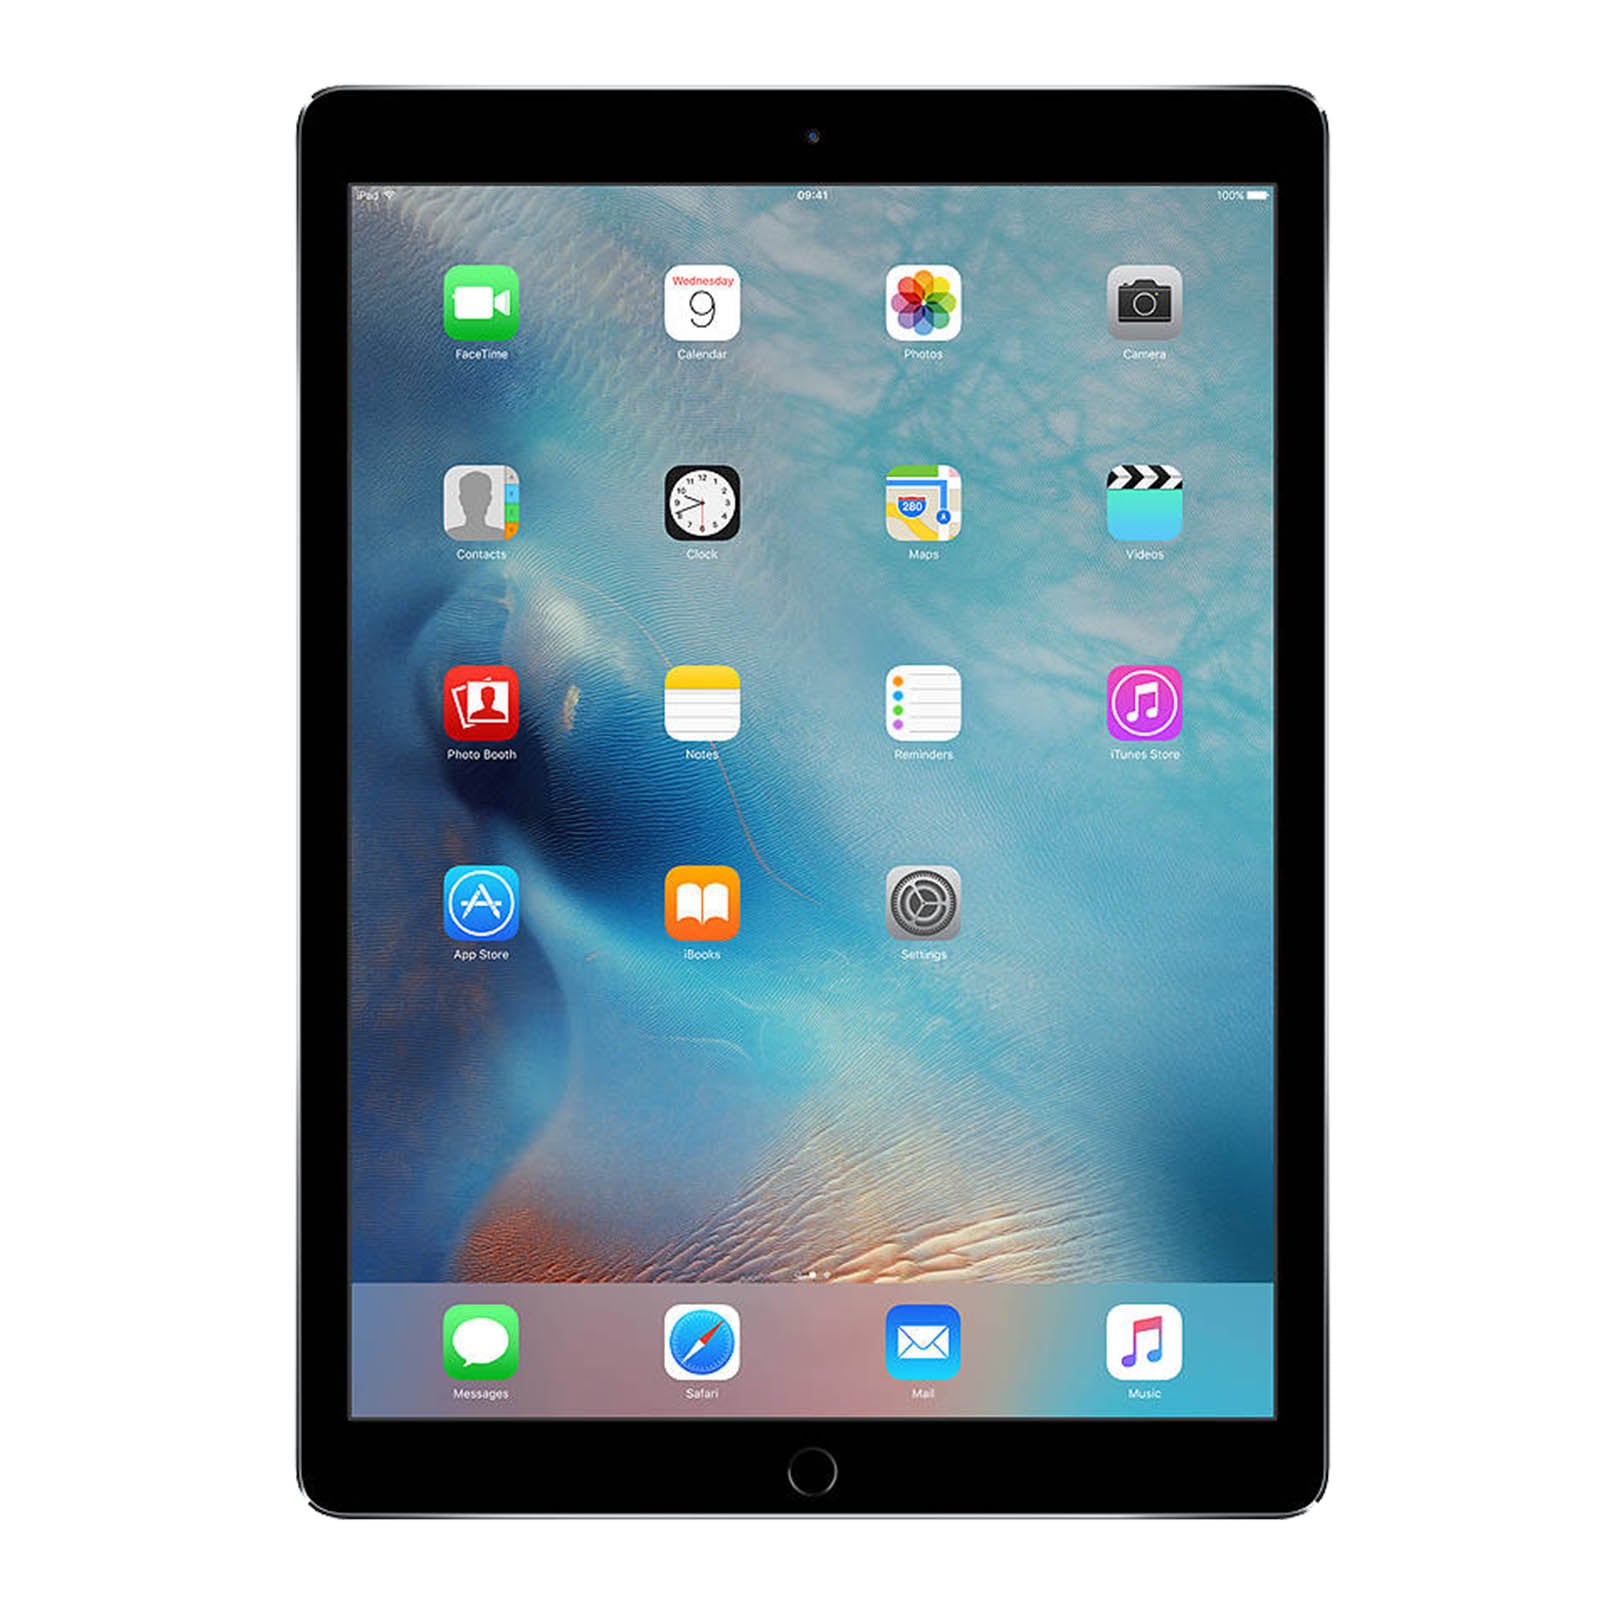 iPad Pro 12.9 Inch 3rd Gen 64GB Space Grey Very Good - WiFi